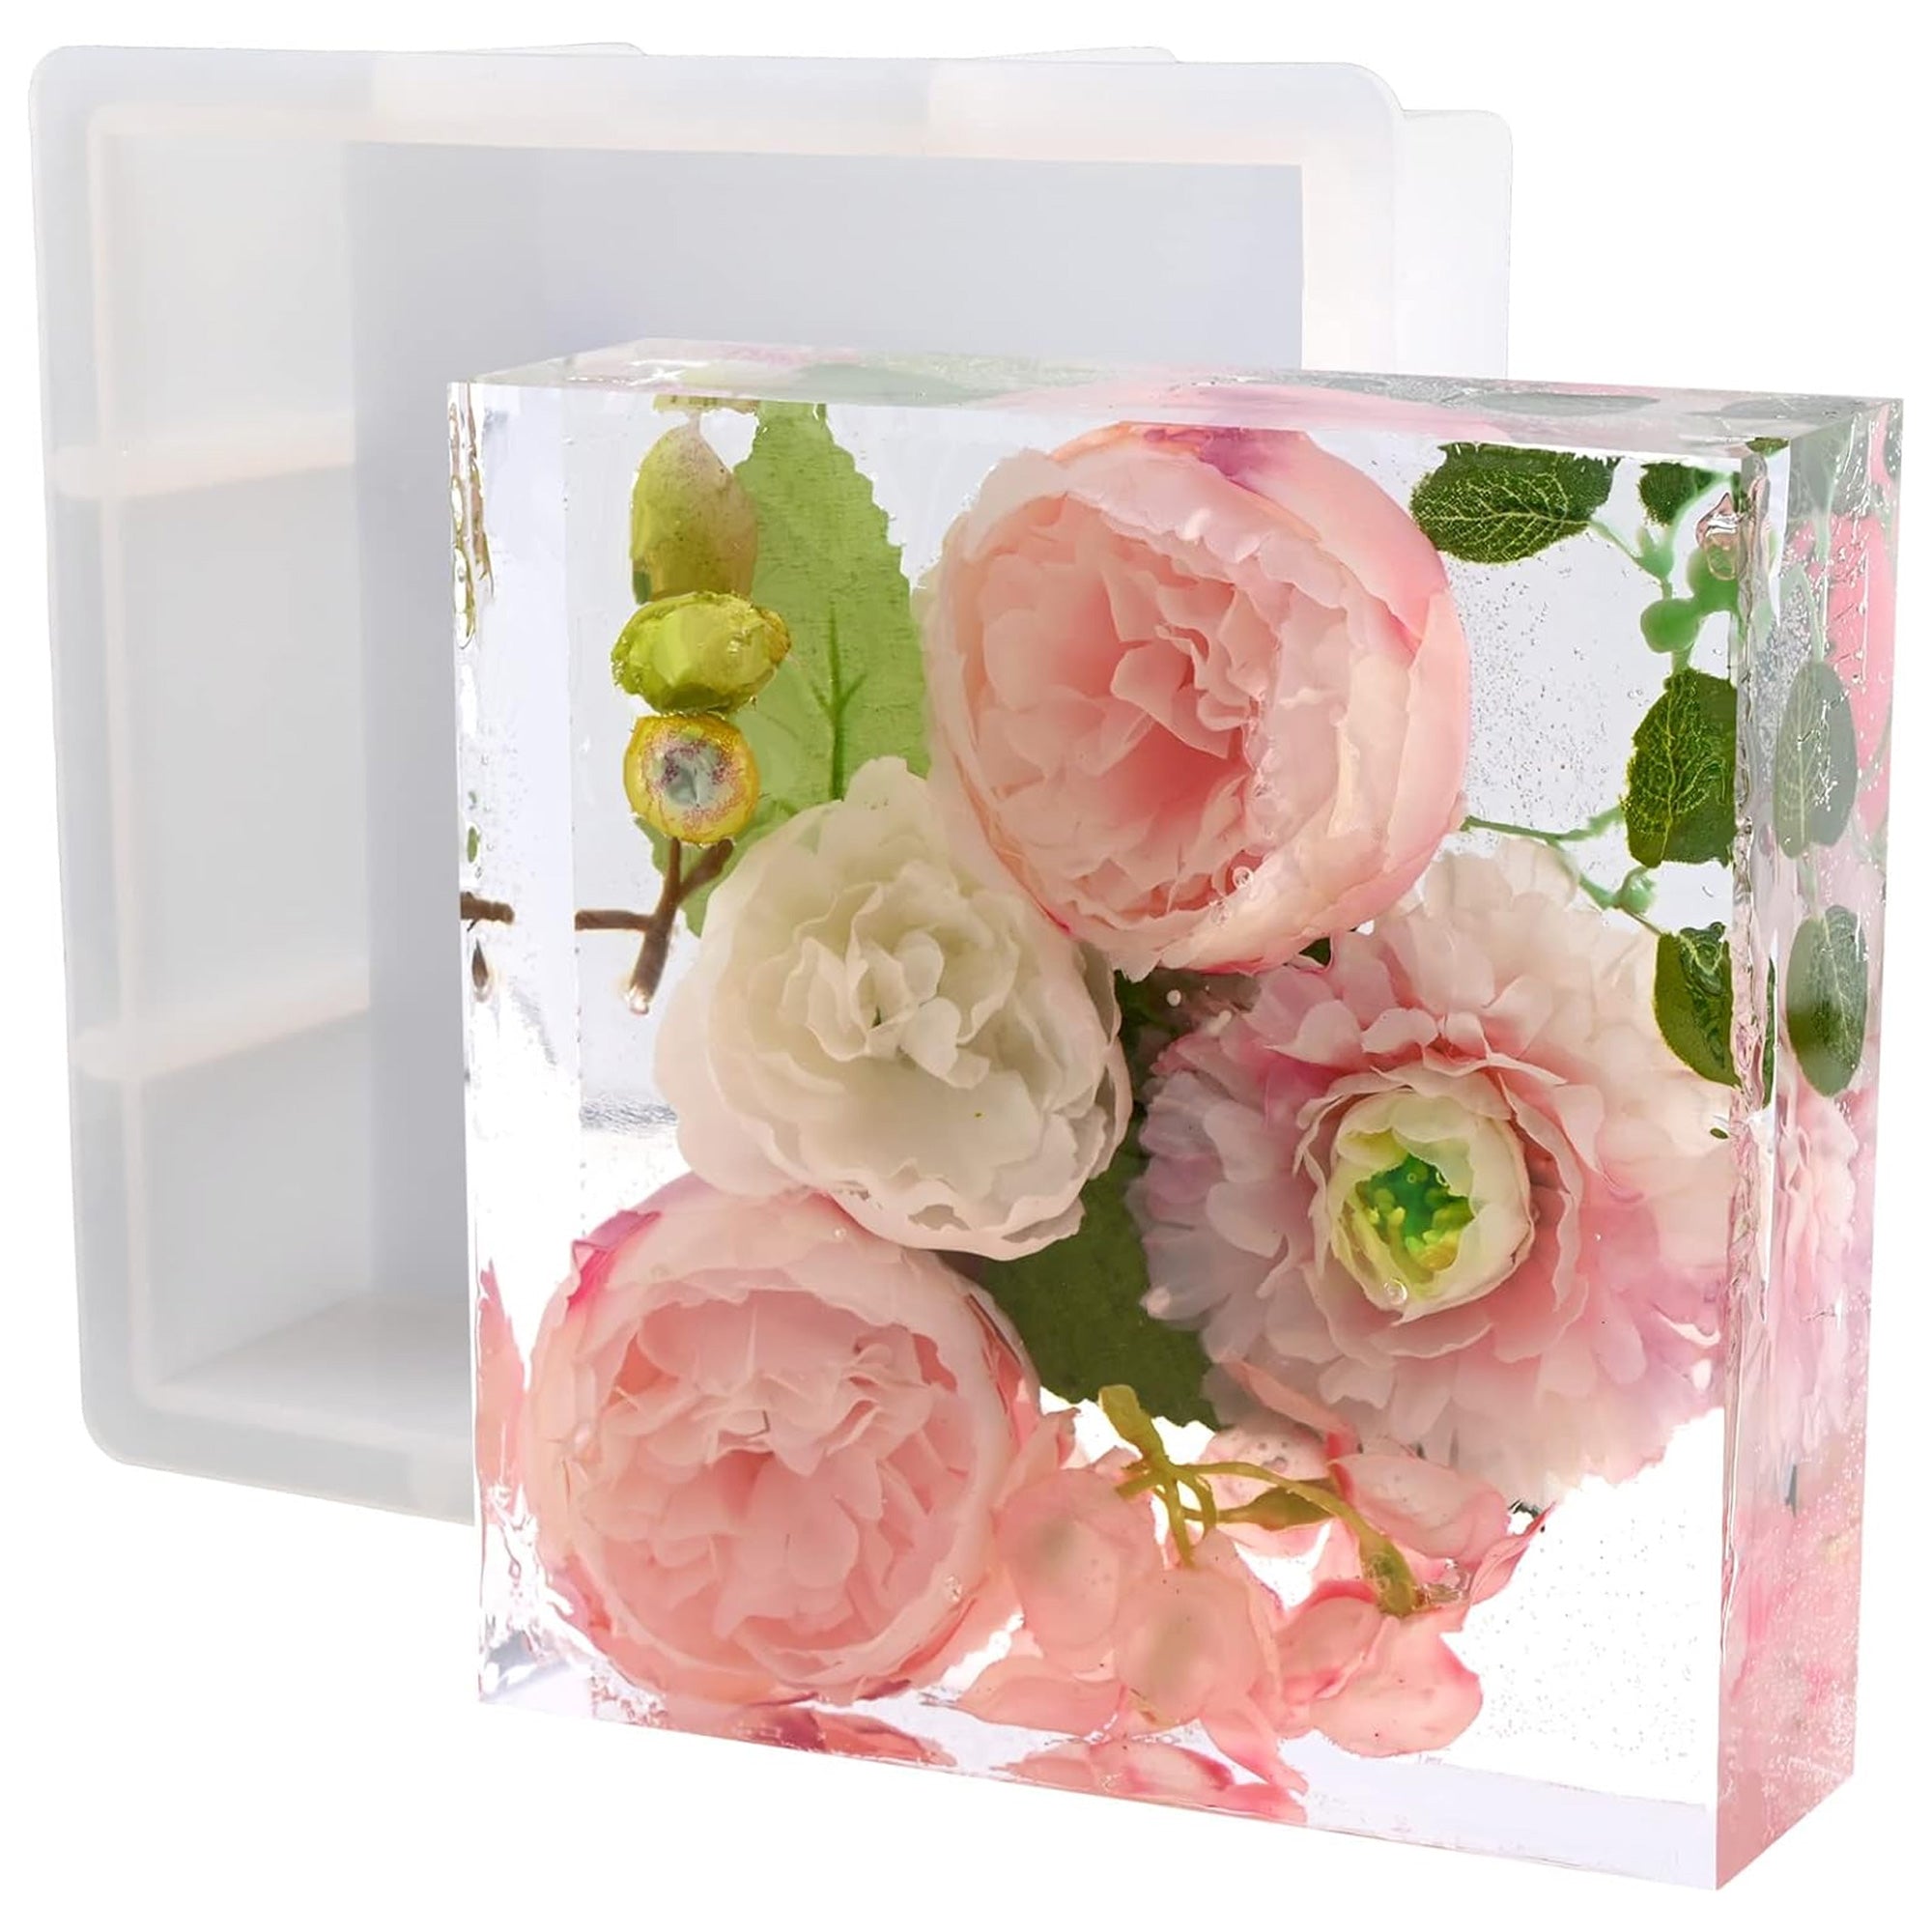 Woodberg - قالب سيليكون مربع كبير لصب الورد بالريزن و الجيسمونايت جودة عالية جداً 